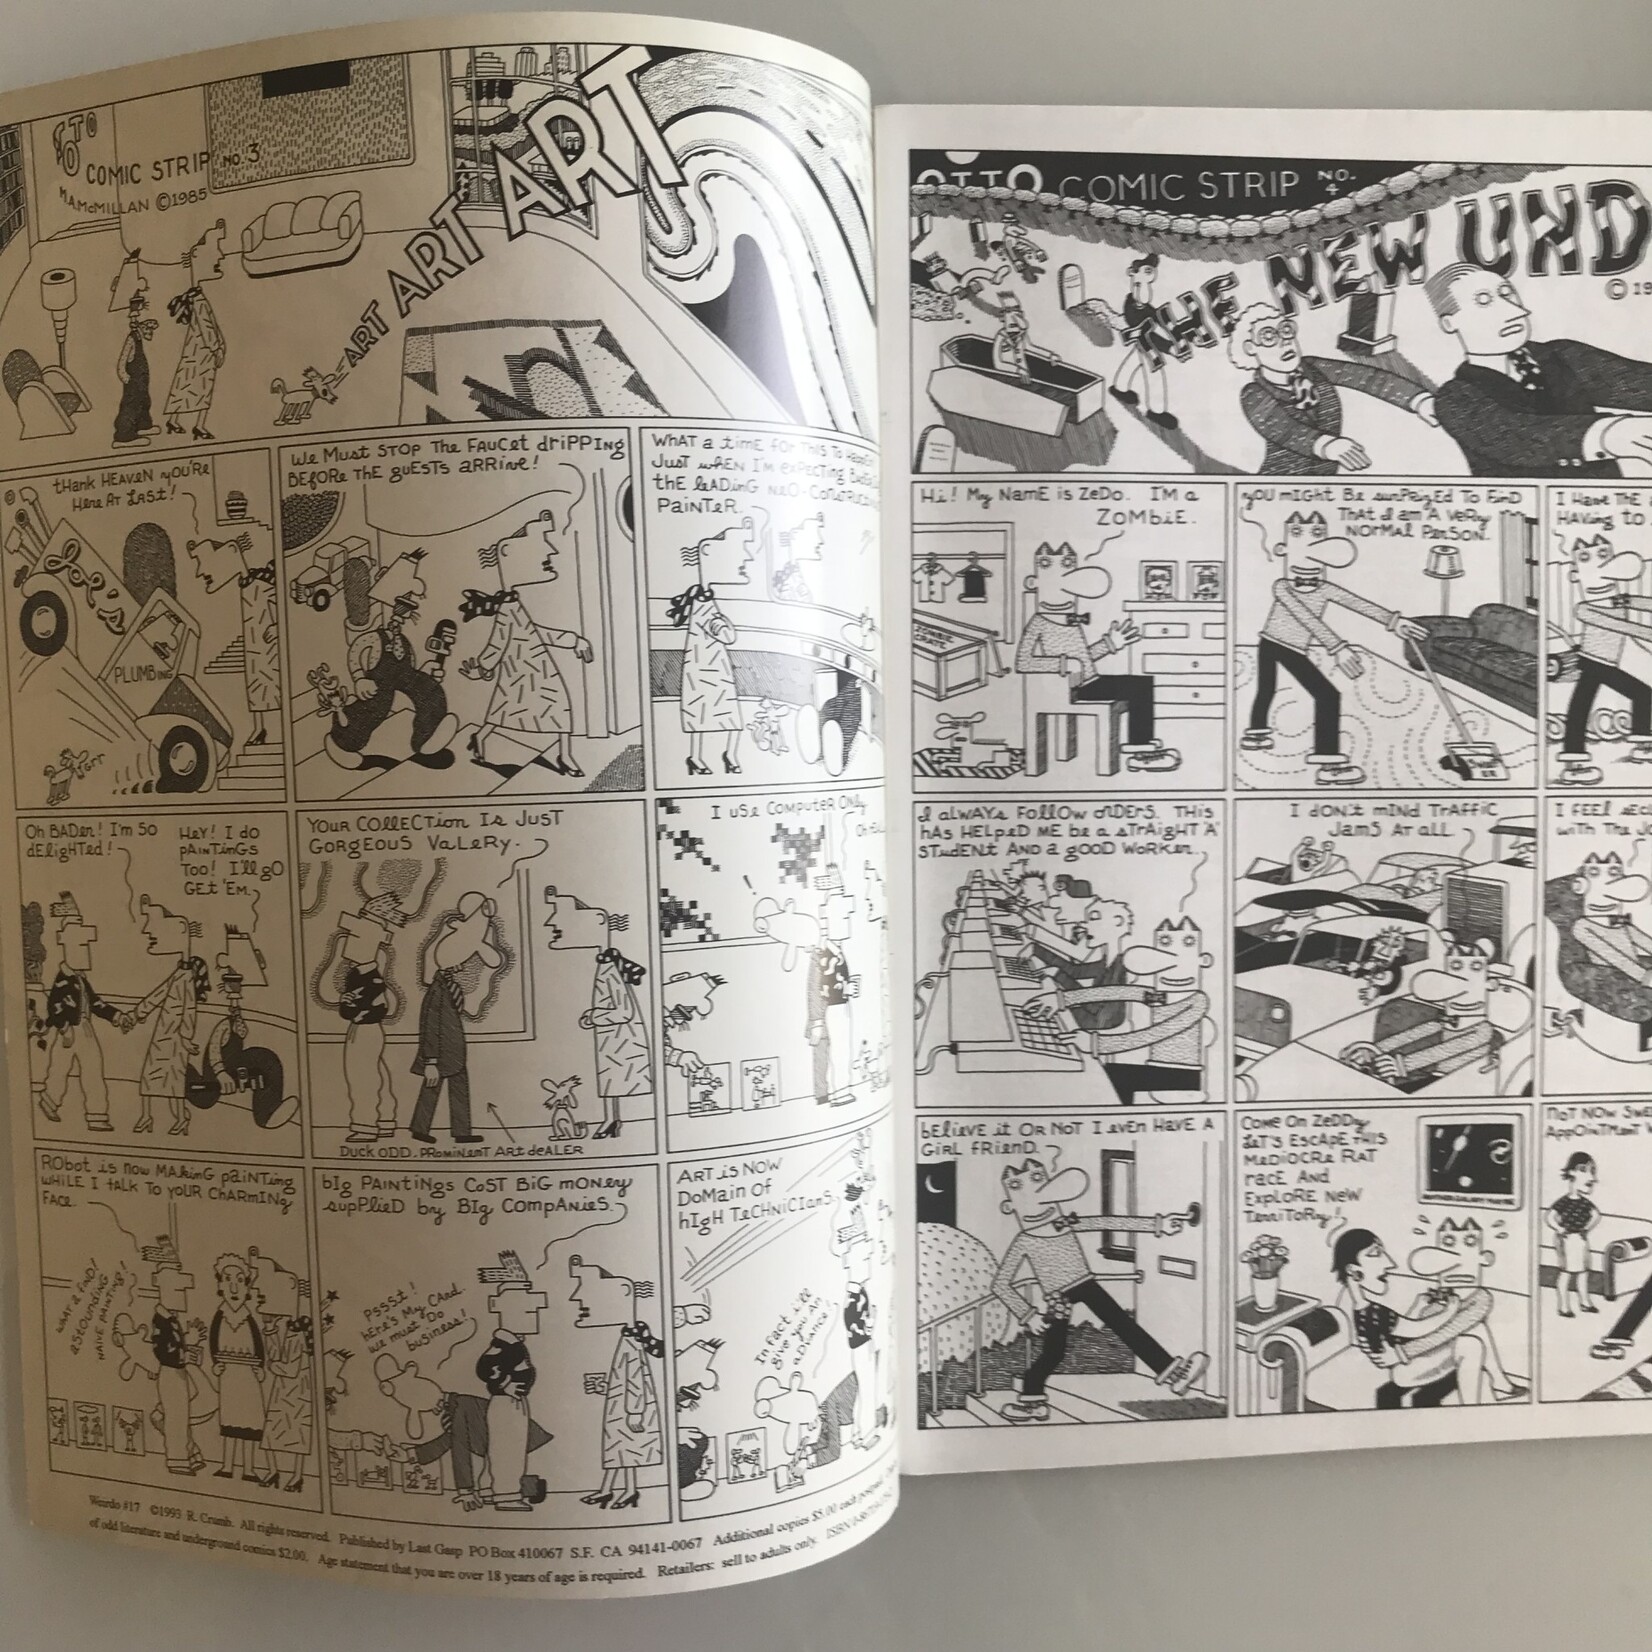 Weirdo - Vol. 1 #17 1986 (1993 Printing) - Comic Book